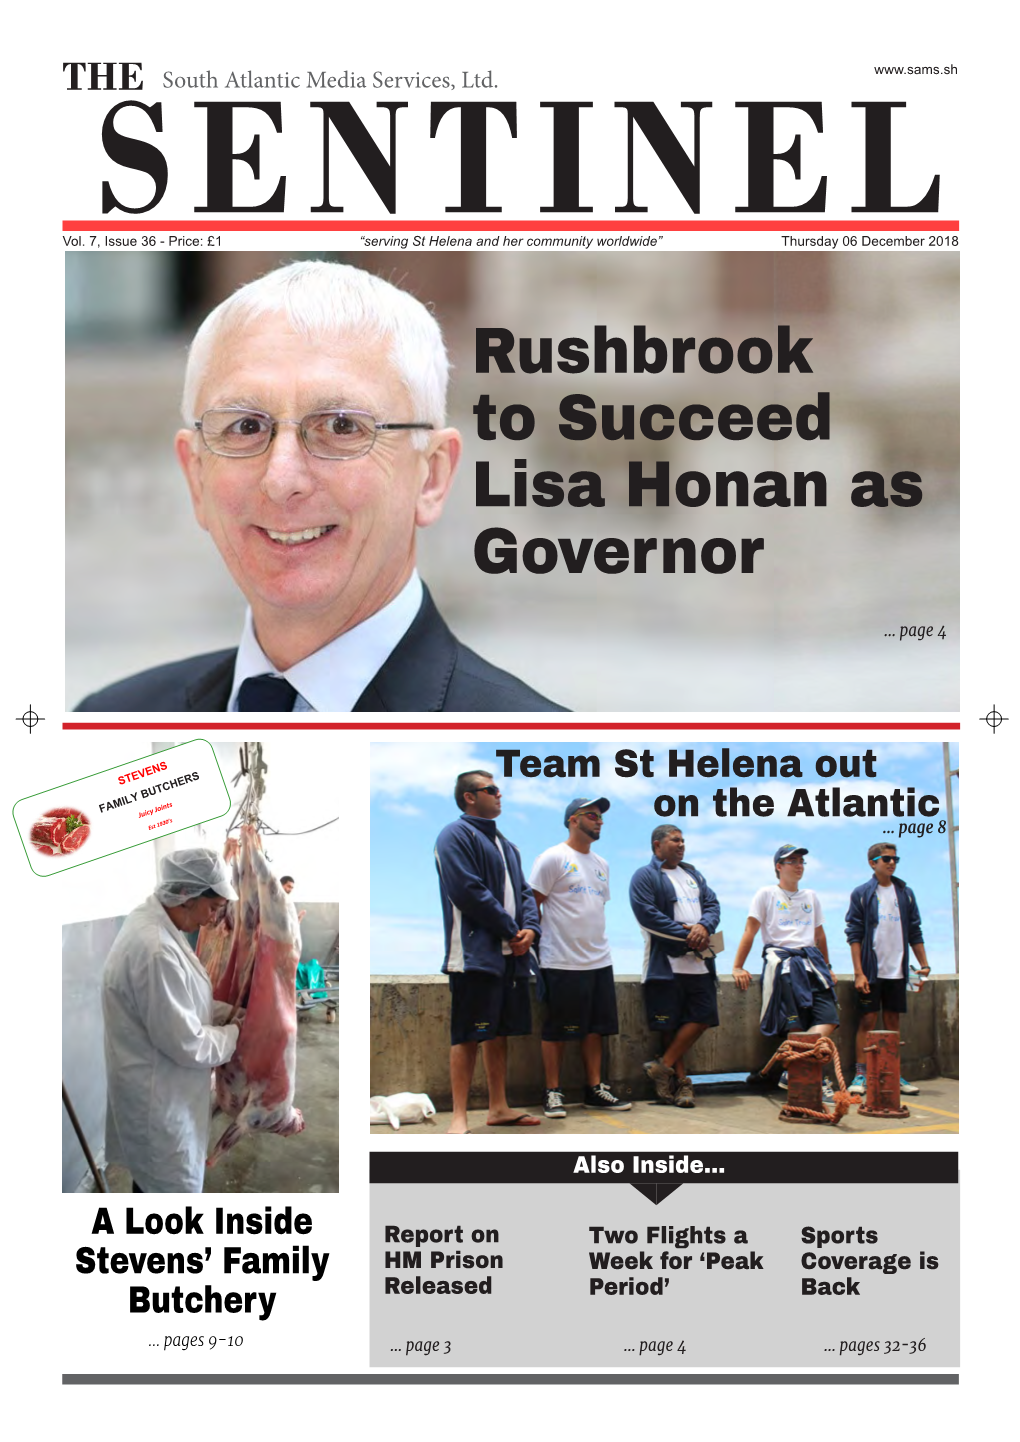 Rushbrook to Succeed Lisa Honan As Governor